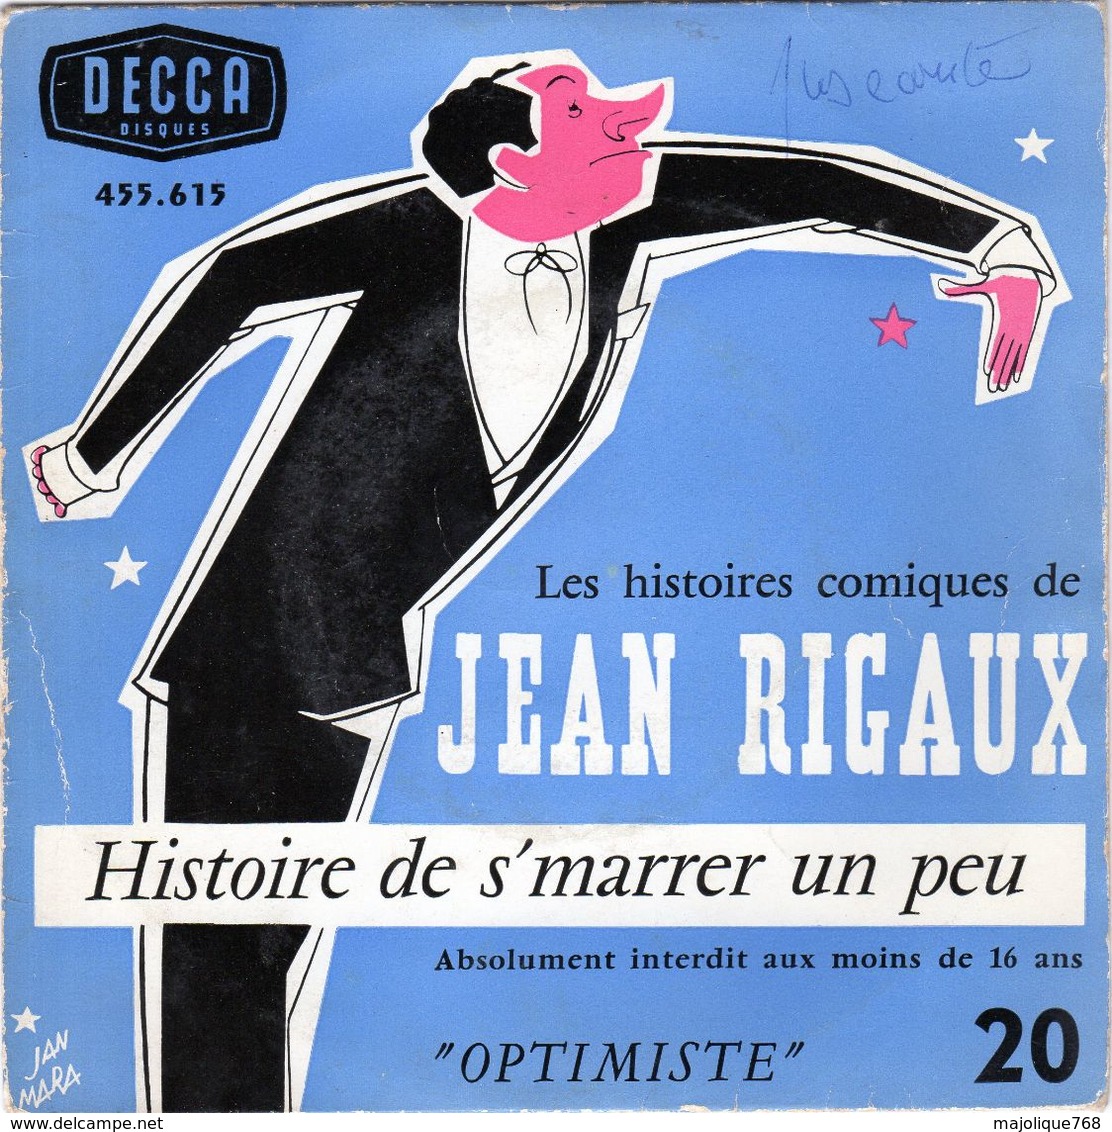 Disque - Jean Rigaux Optimiste N°20 - Histoire De S'marrer Un Peu - DECCA 455.615 - - Humor, Cabaret